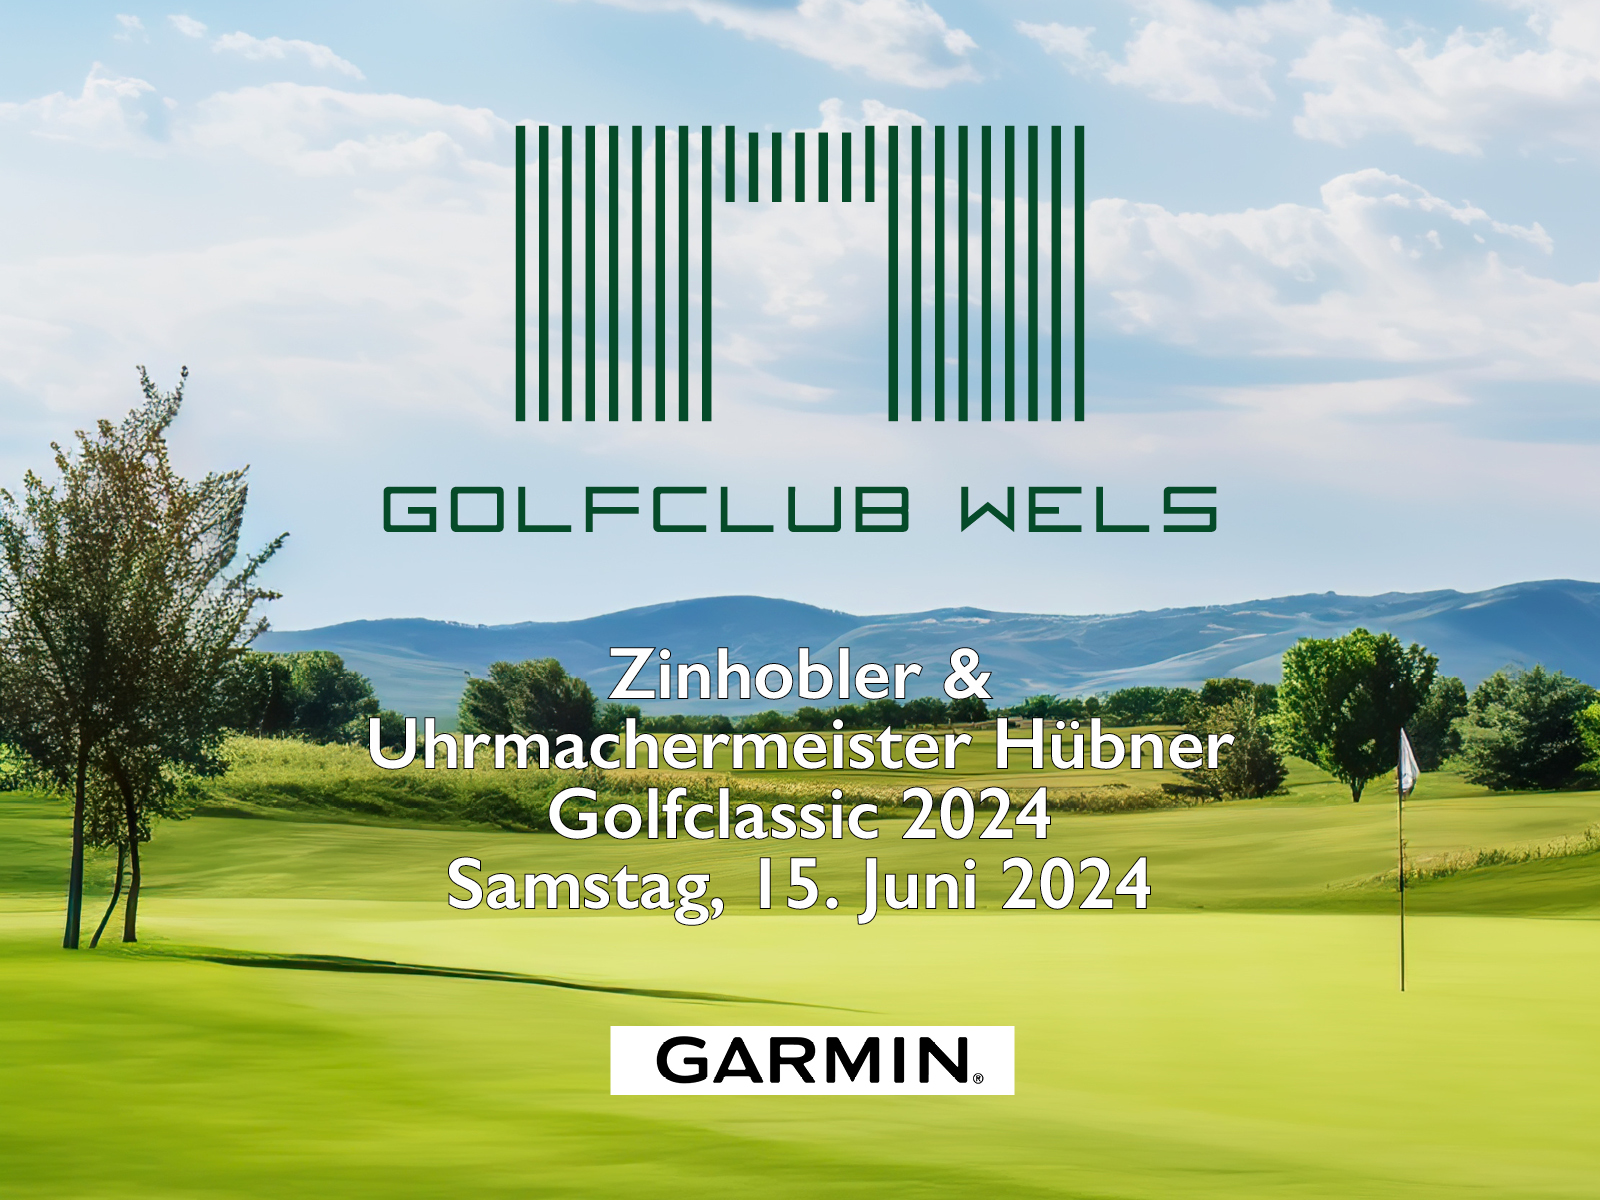 Uhrmachermeister Hübner Golfclassic 2024